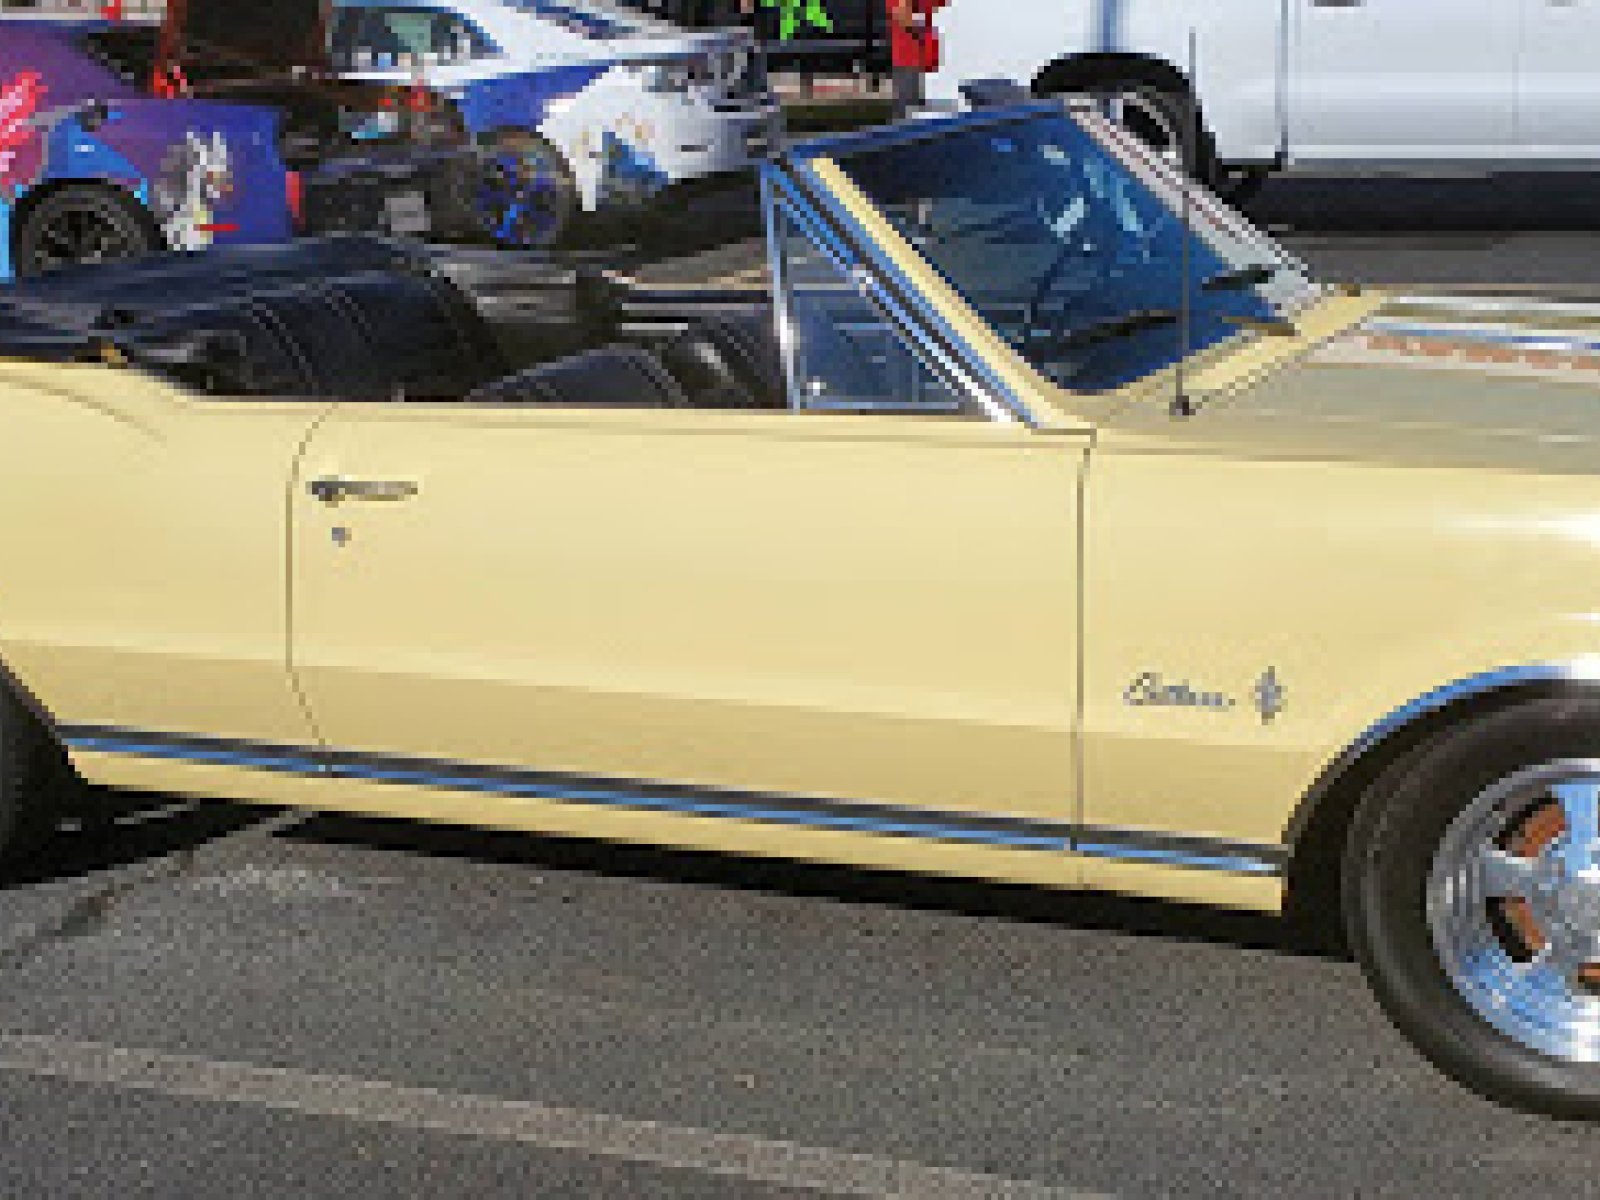 1967 Oldsmobile Cutlass Supreme Convertible